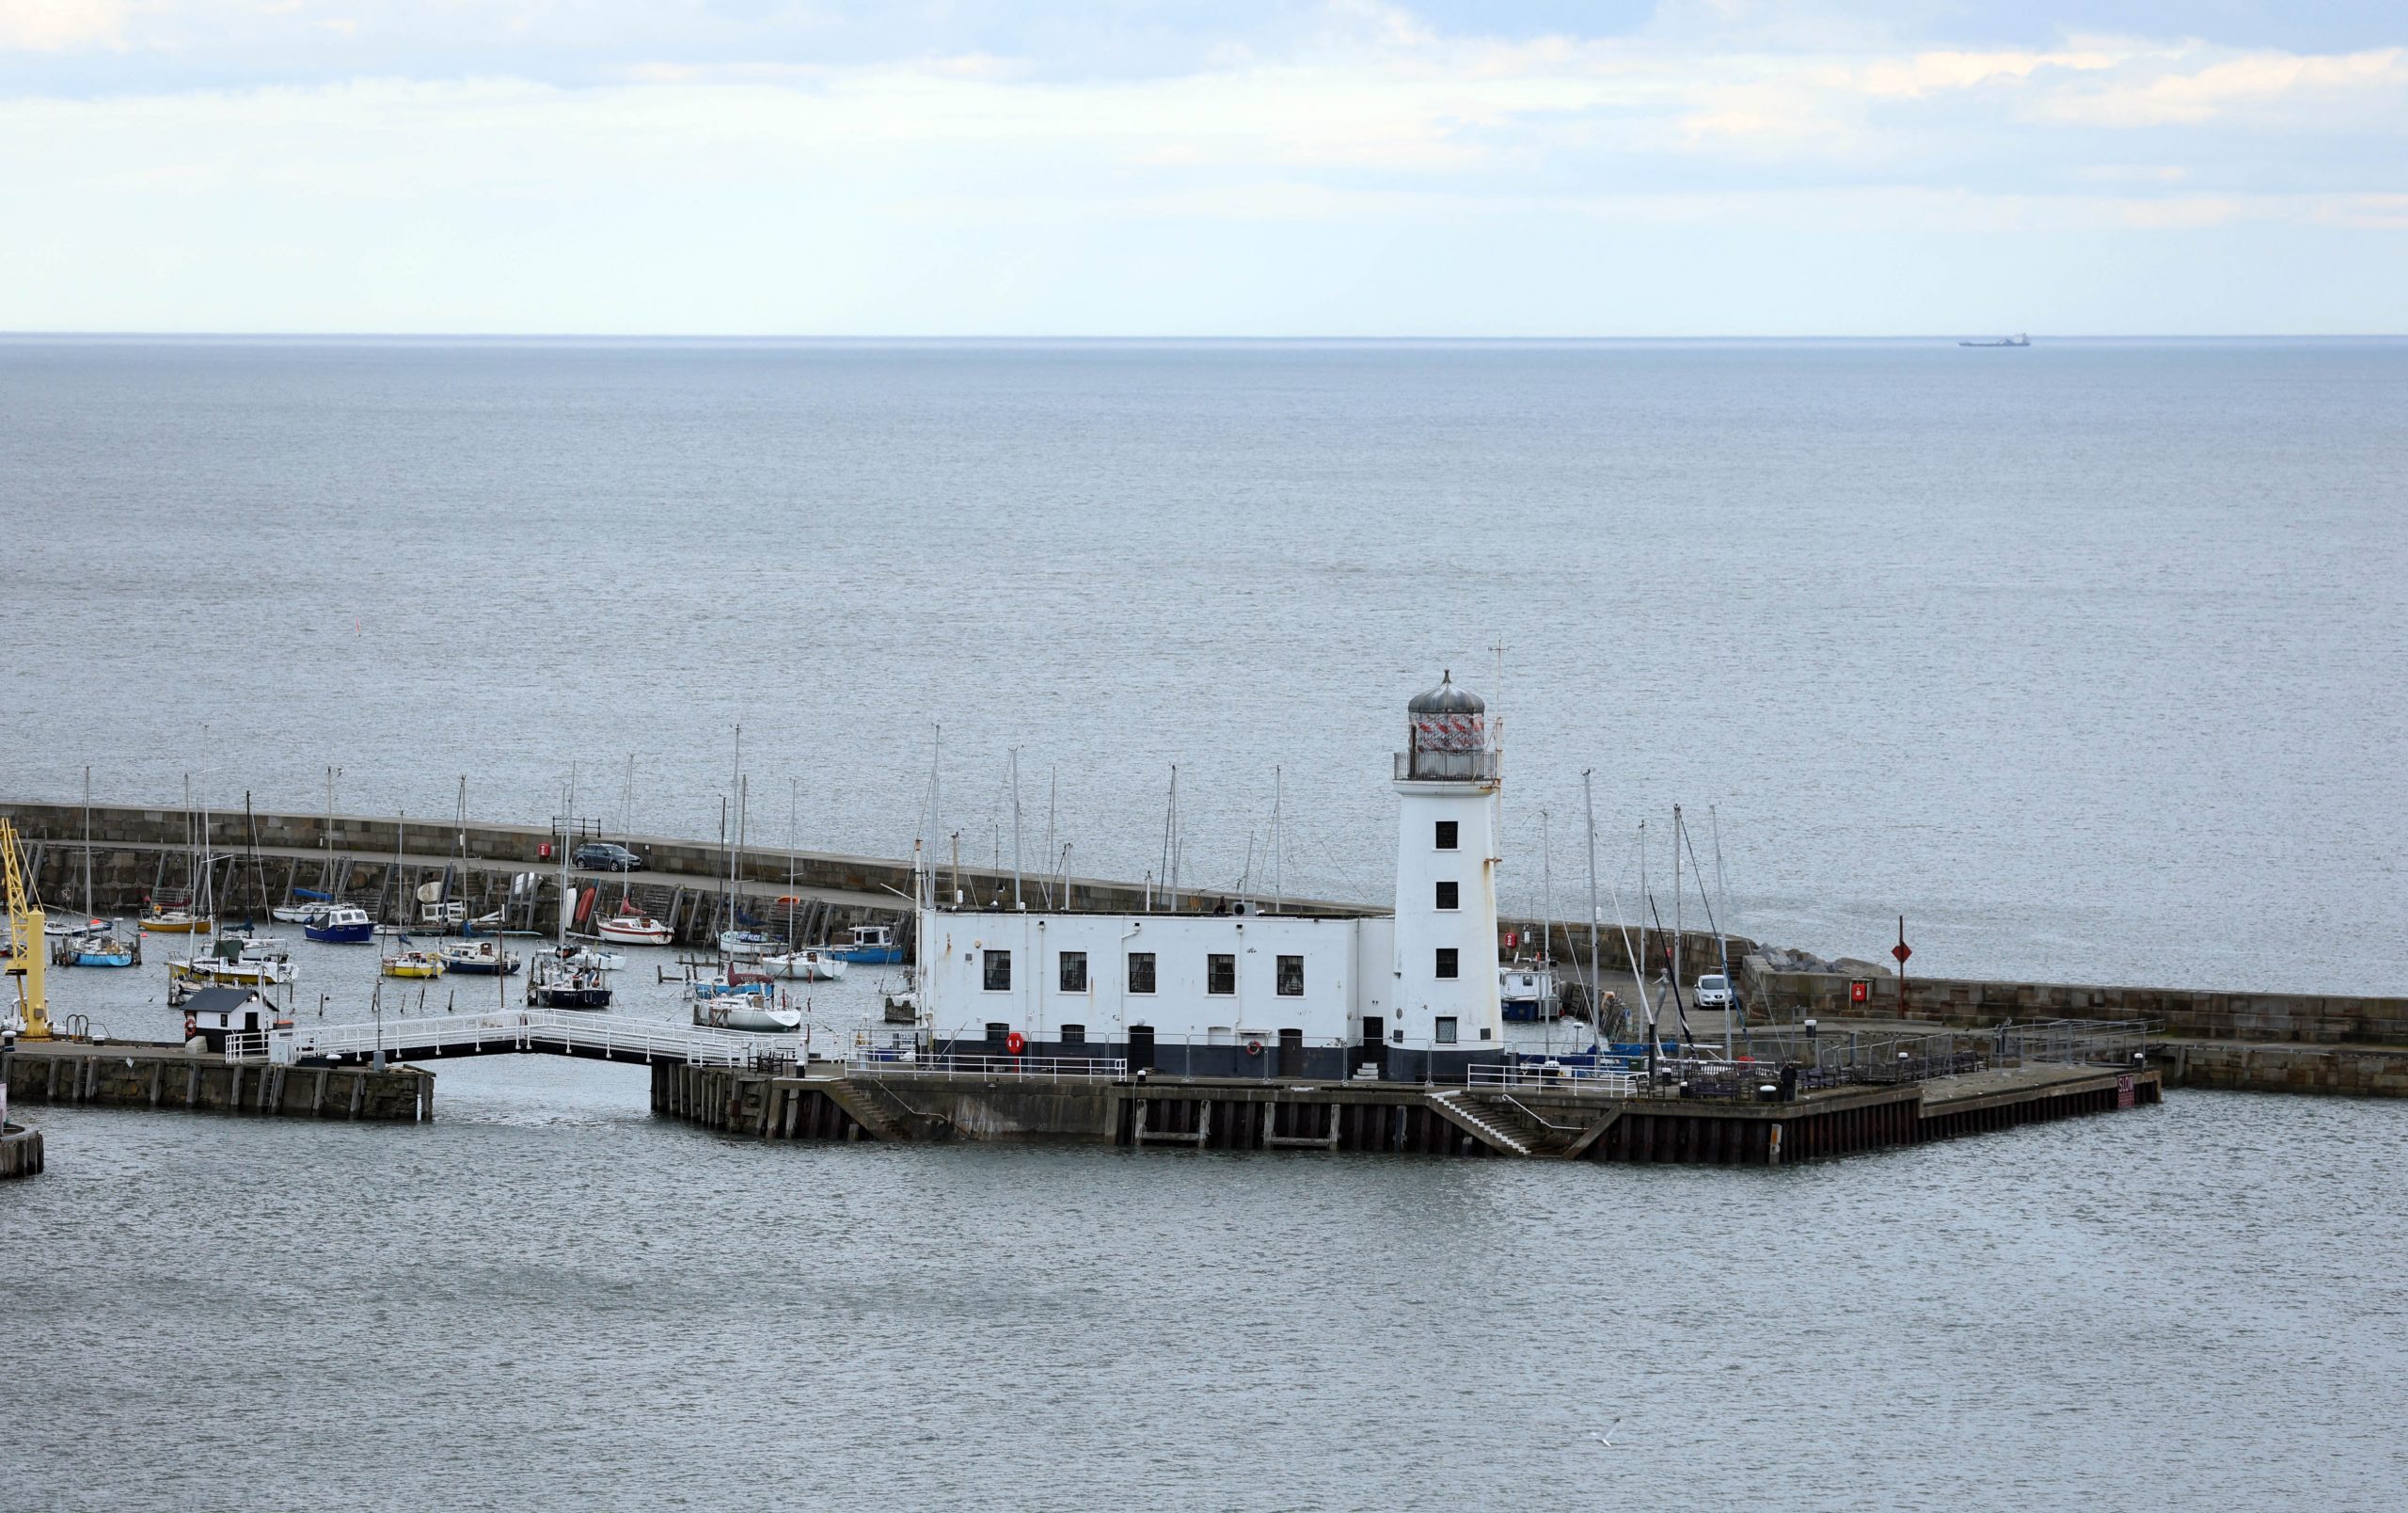 UK’s original seaside resort reveals plans for £11million pier renovation – turning it into modern tourist attraction